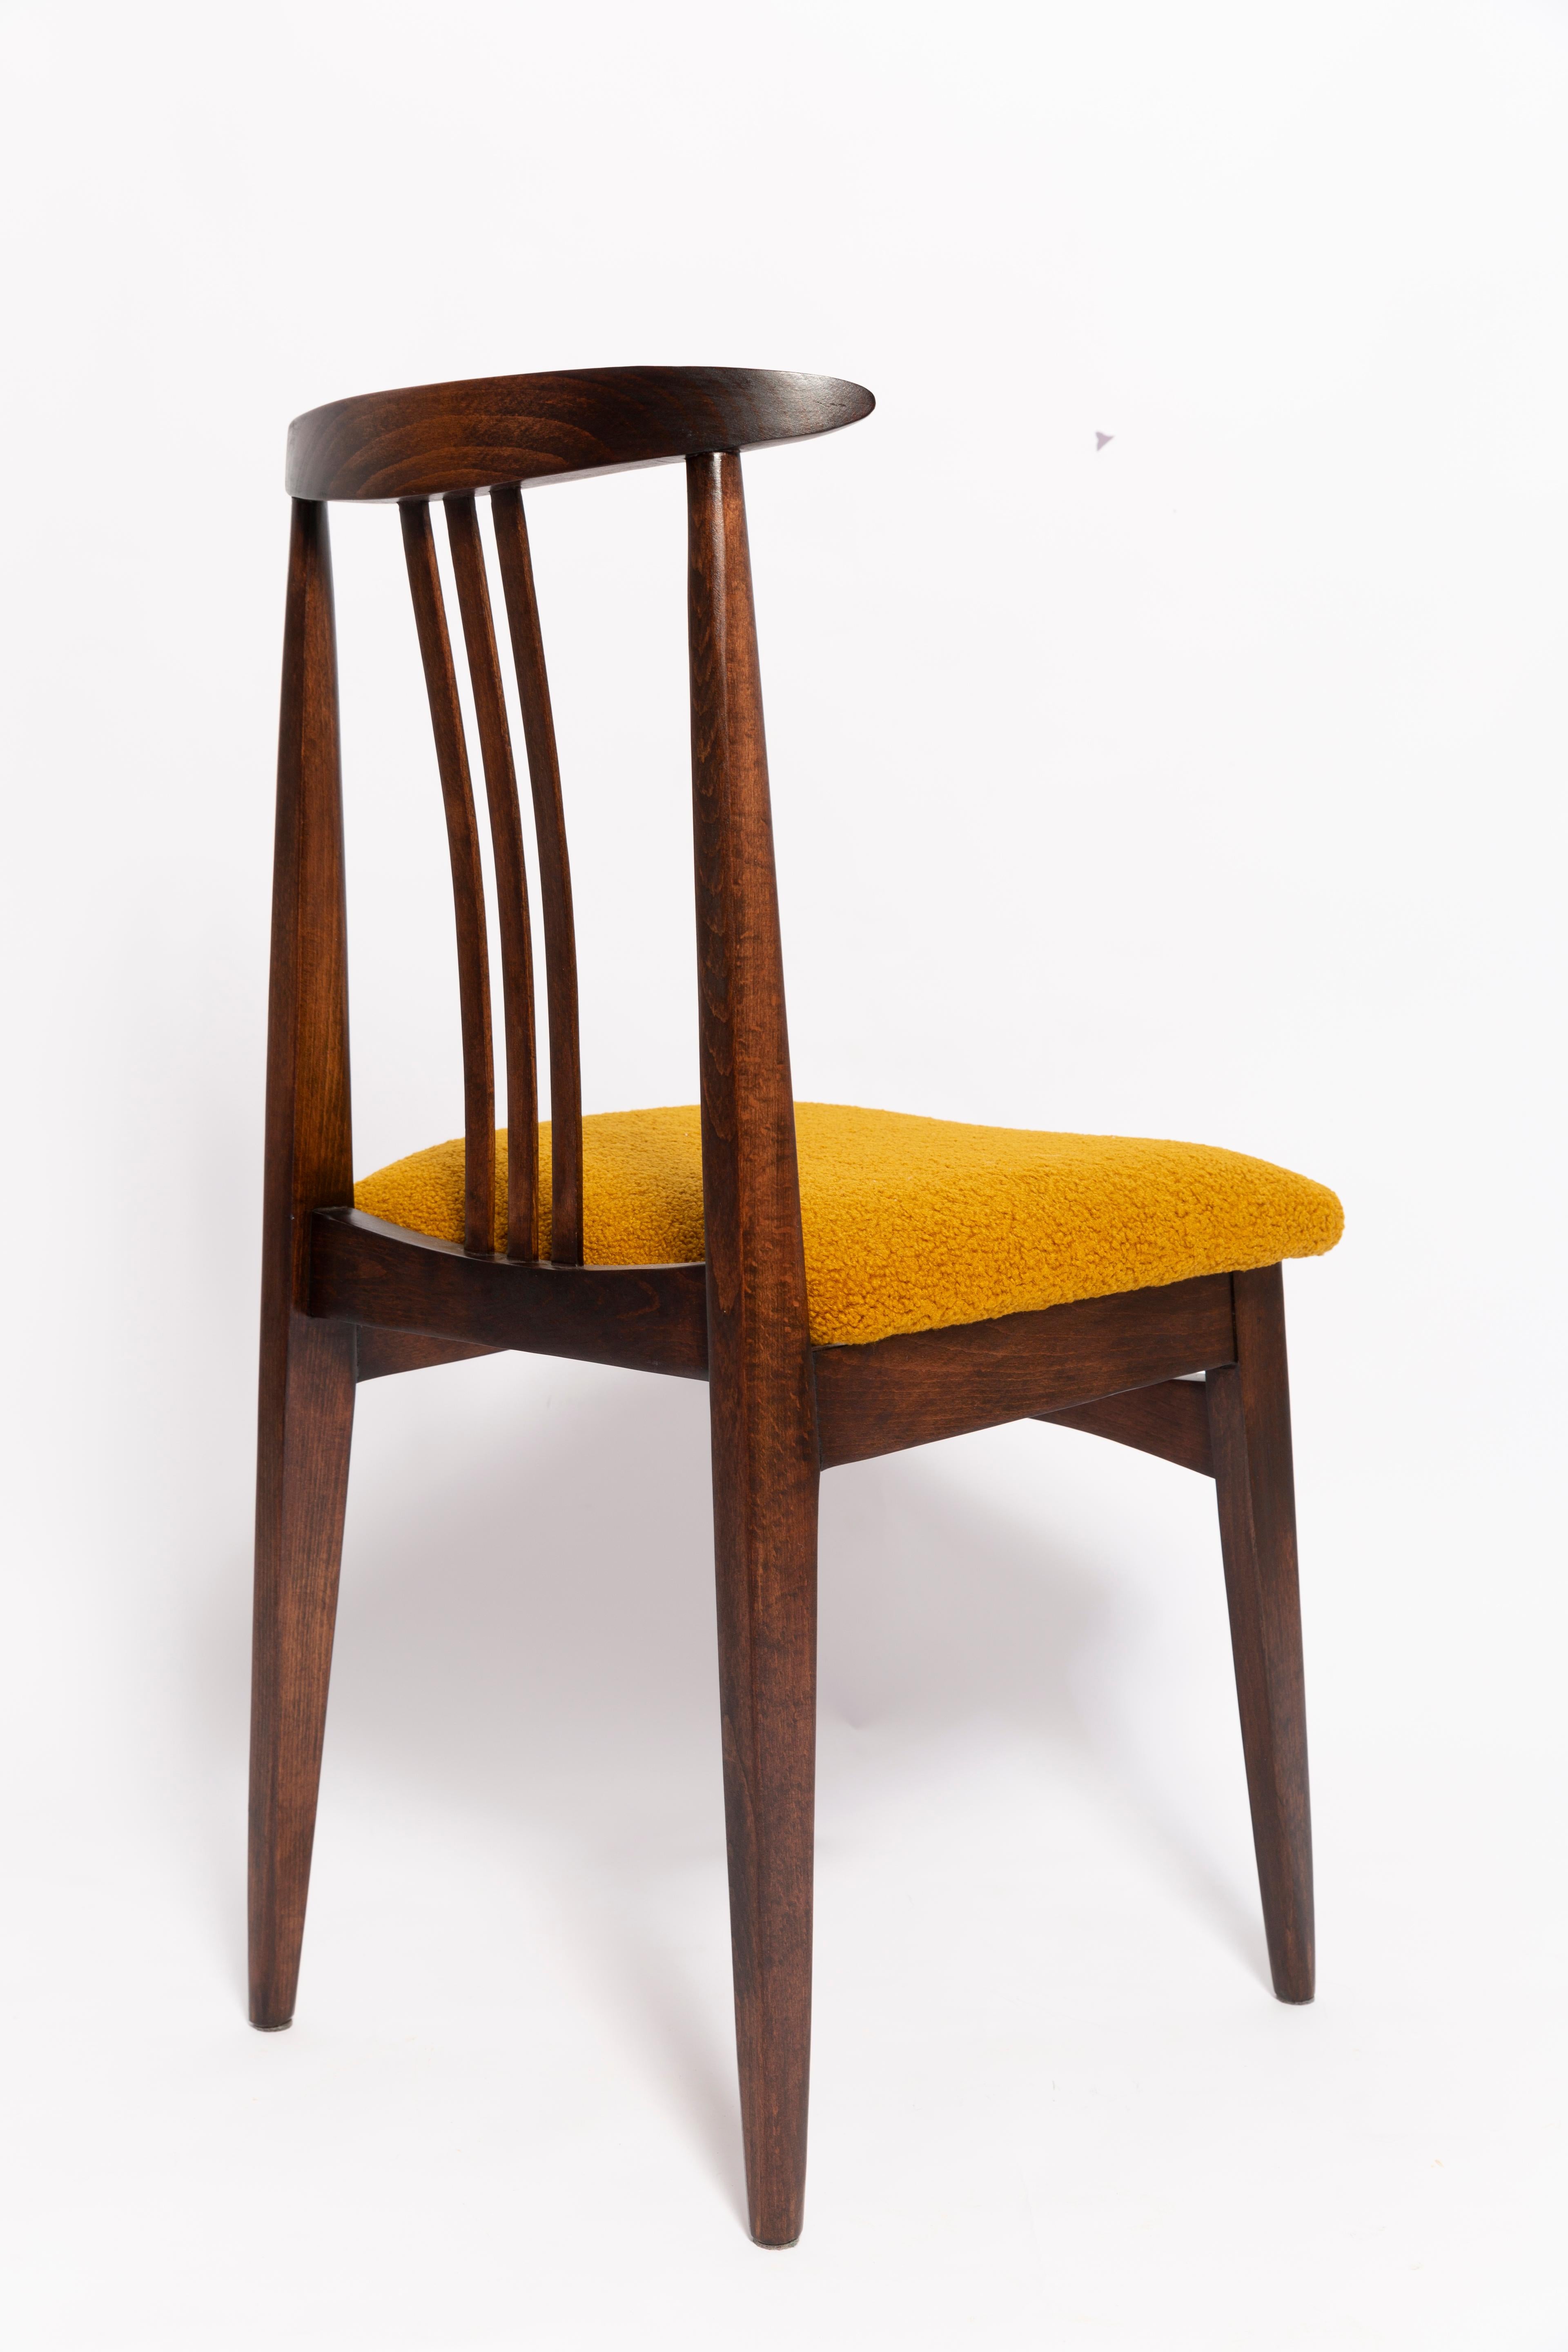 Polish Six Mid-Century Ochre Boucle Chairs, Walnut Wood, M. Zielinski, Europe 1960s For Sale